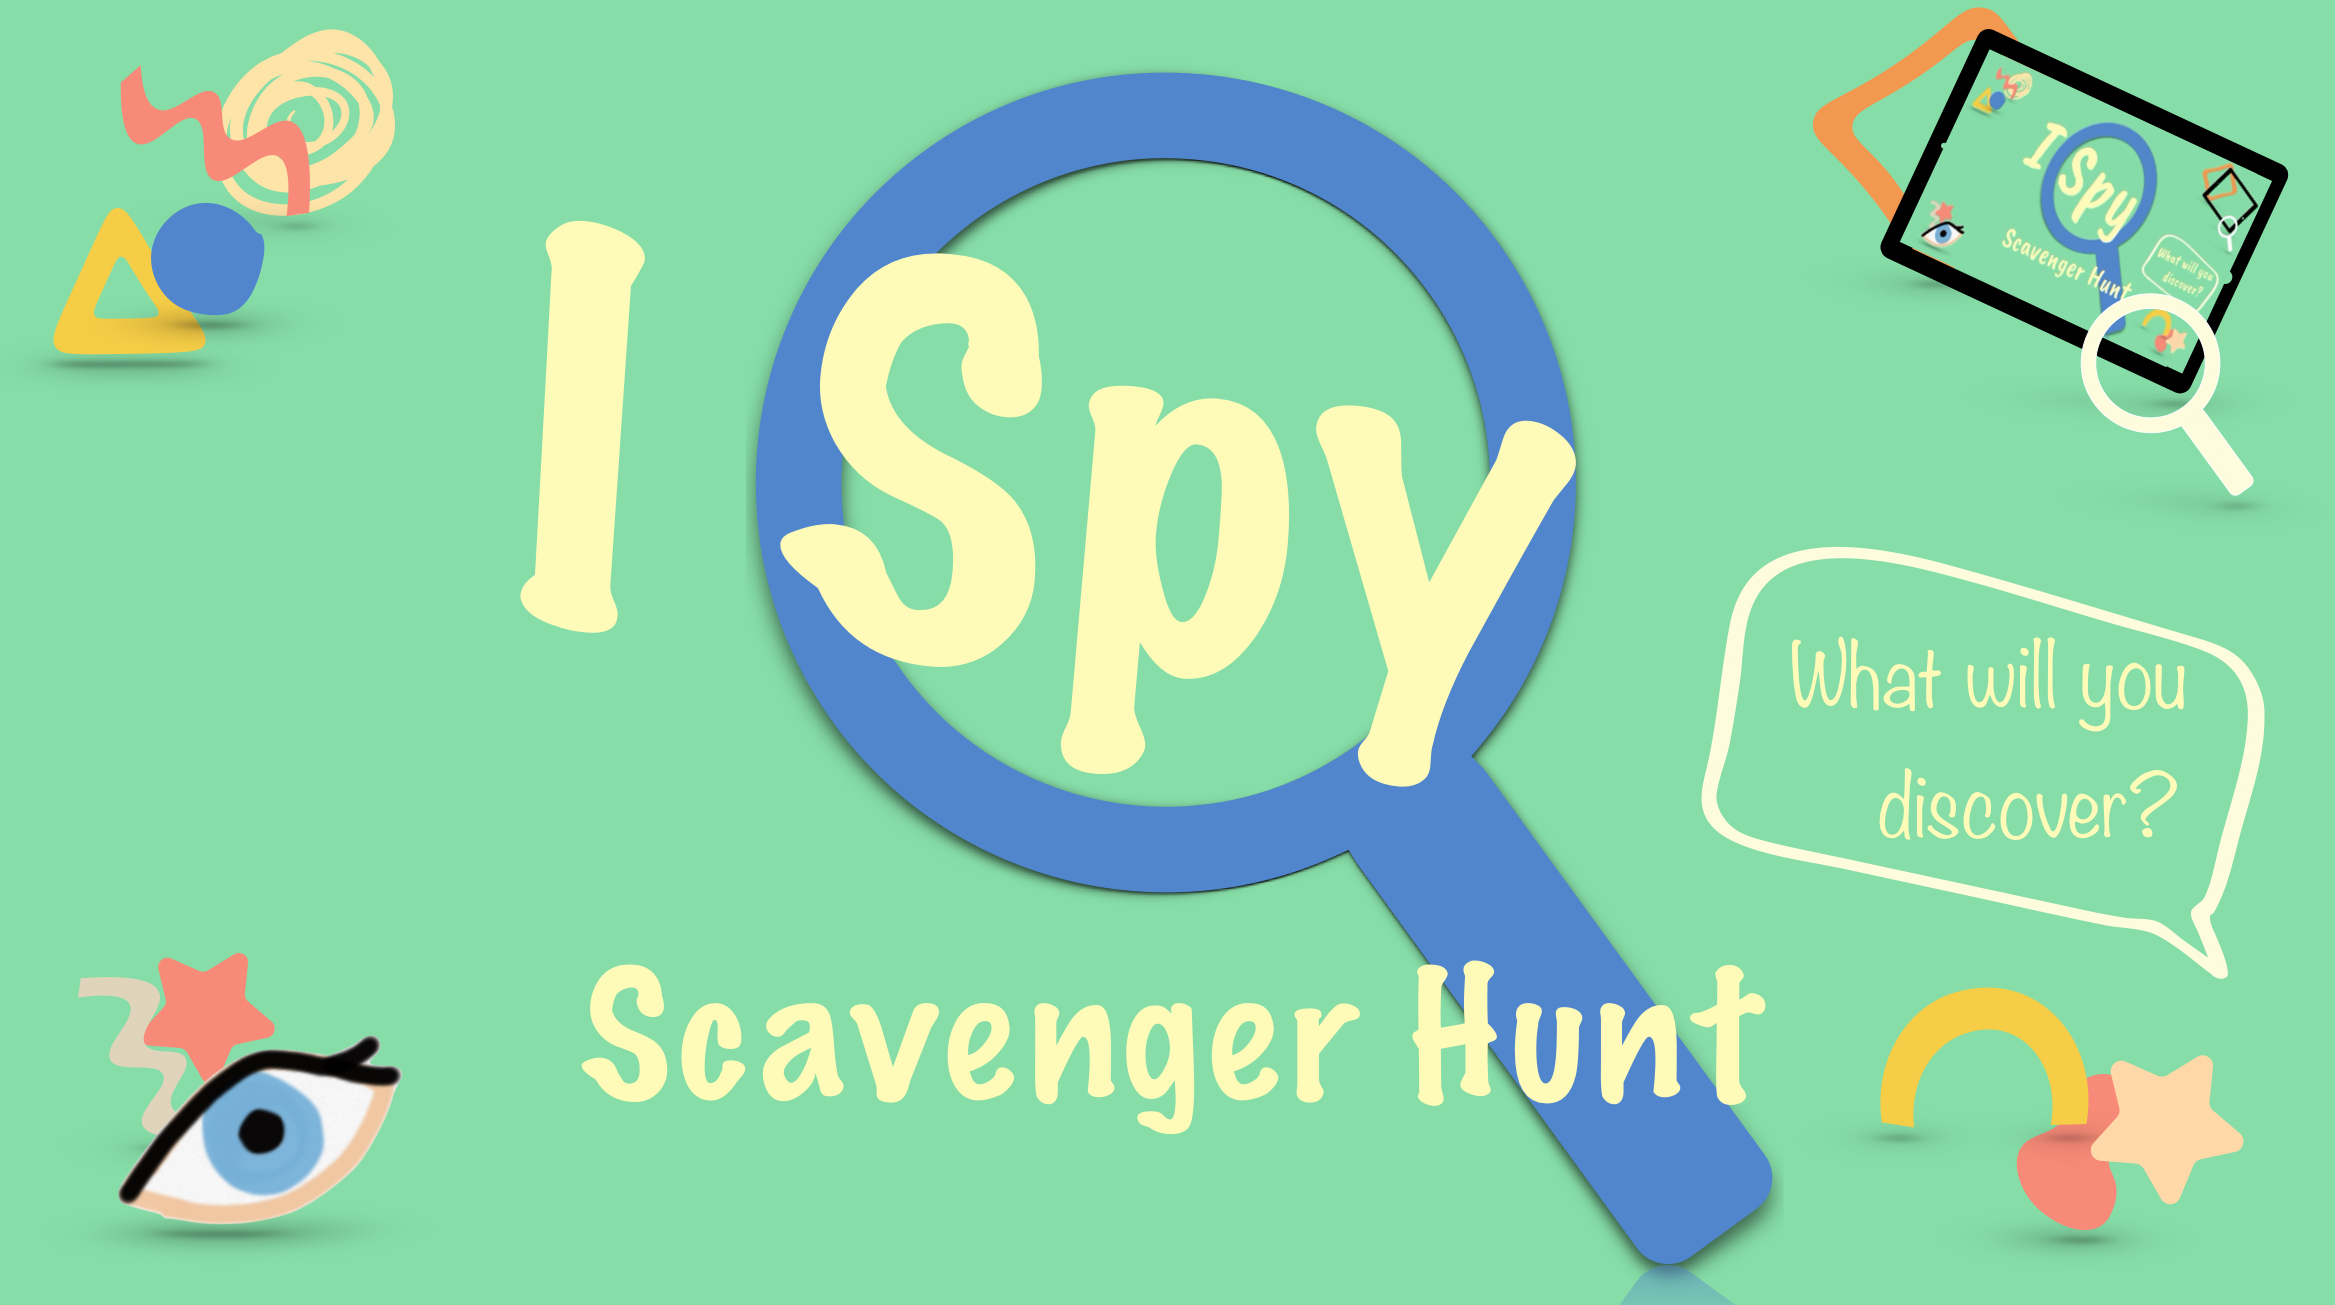 I Spy Scavenger Front Cover of Keynote